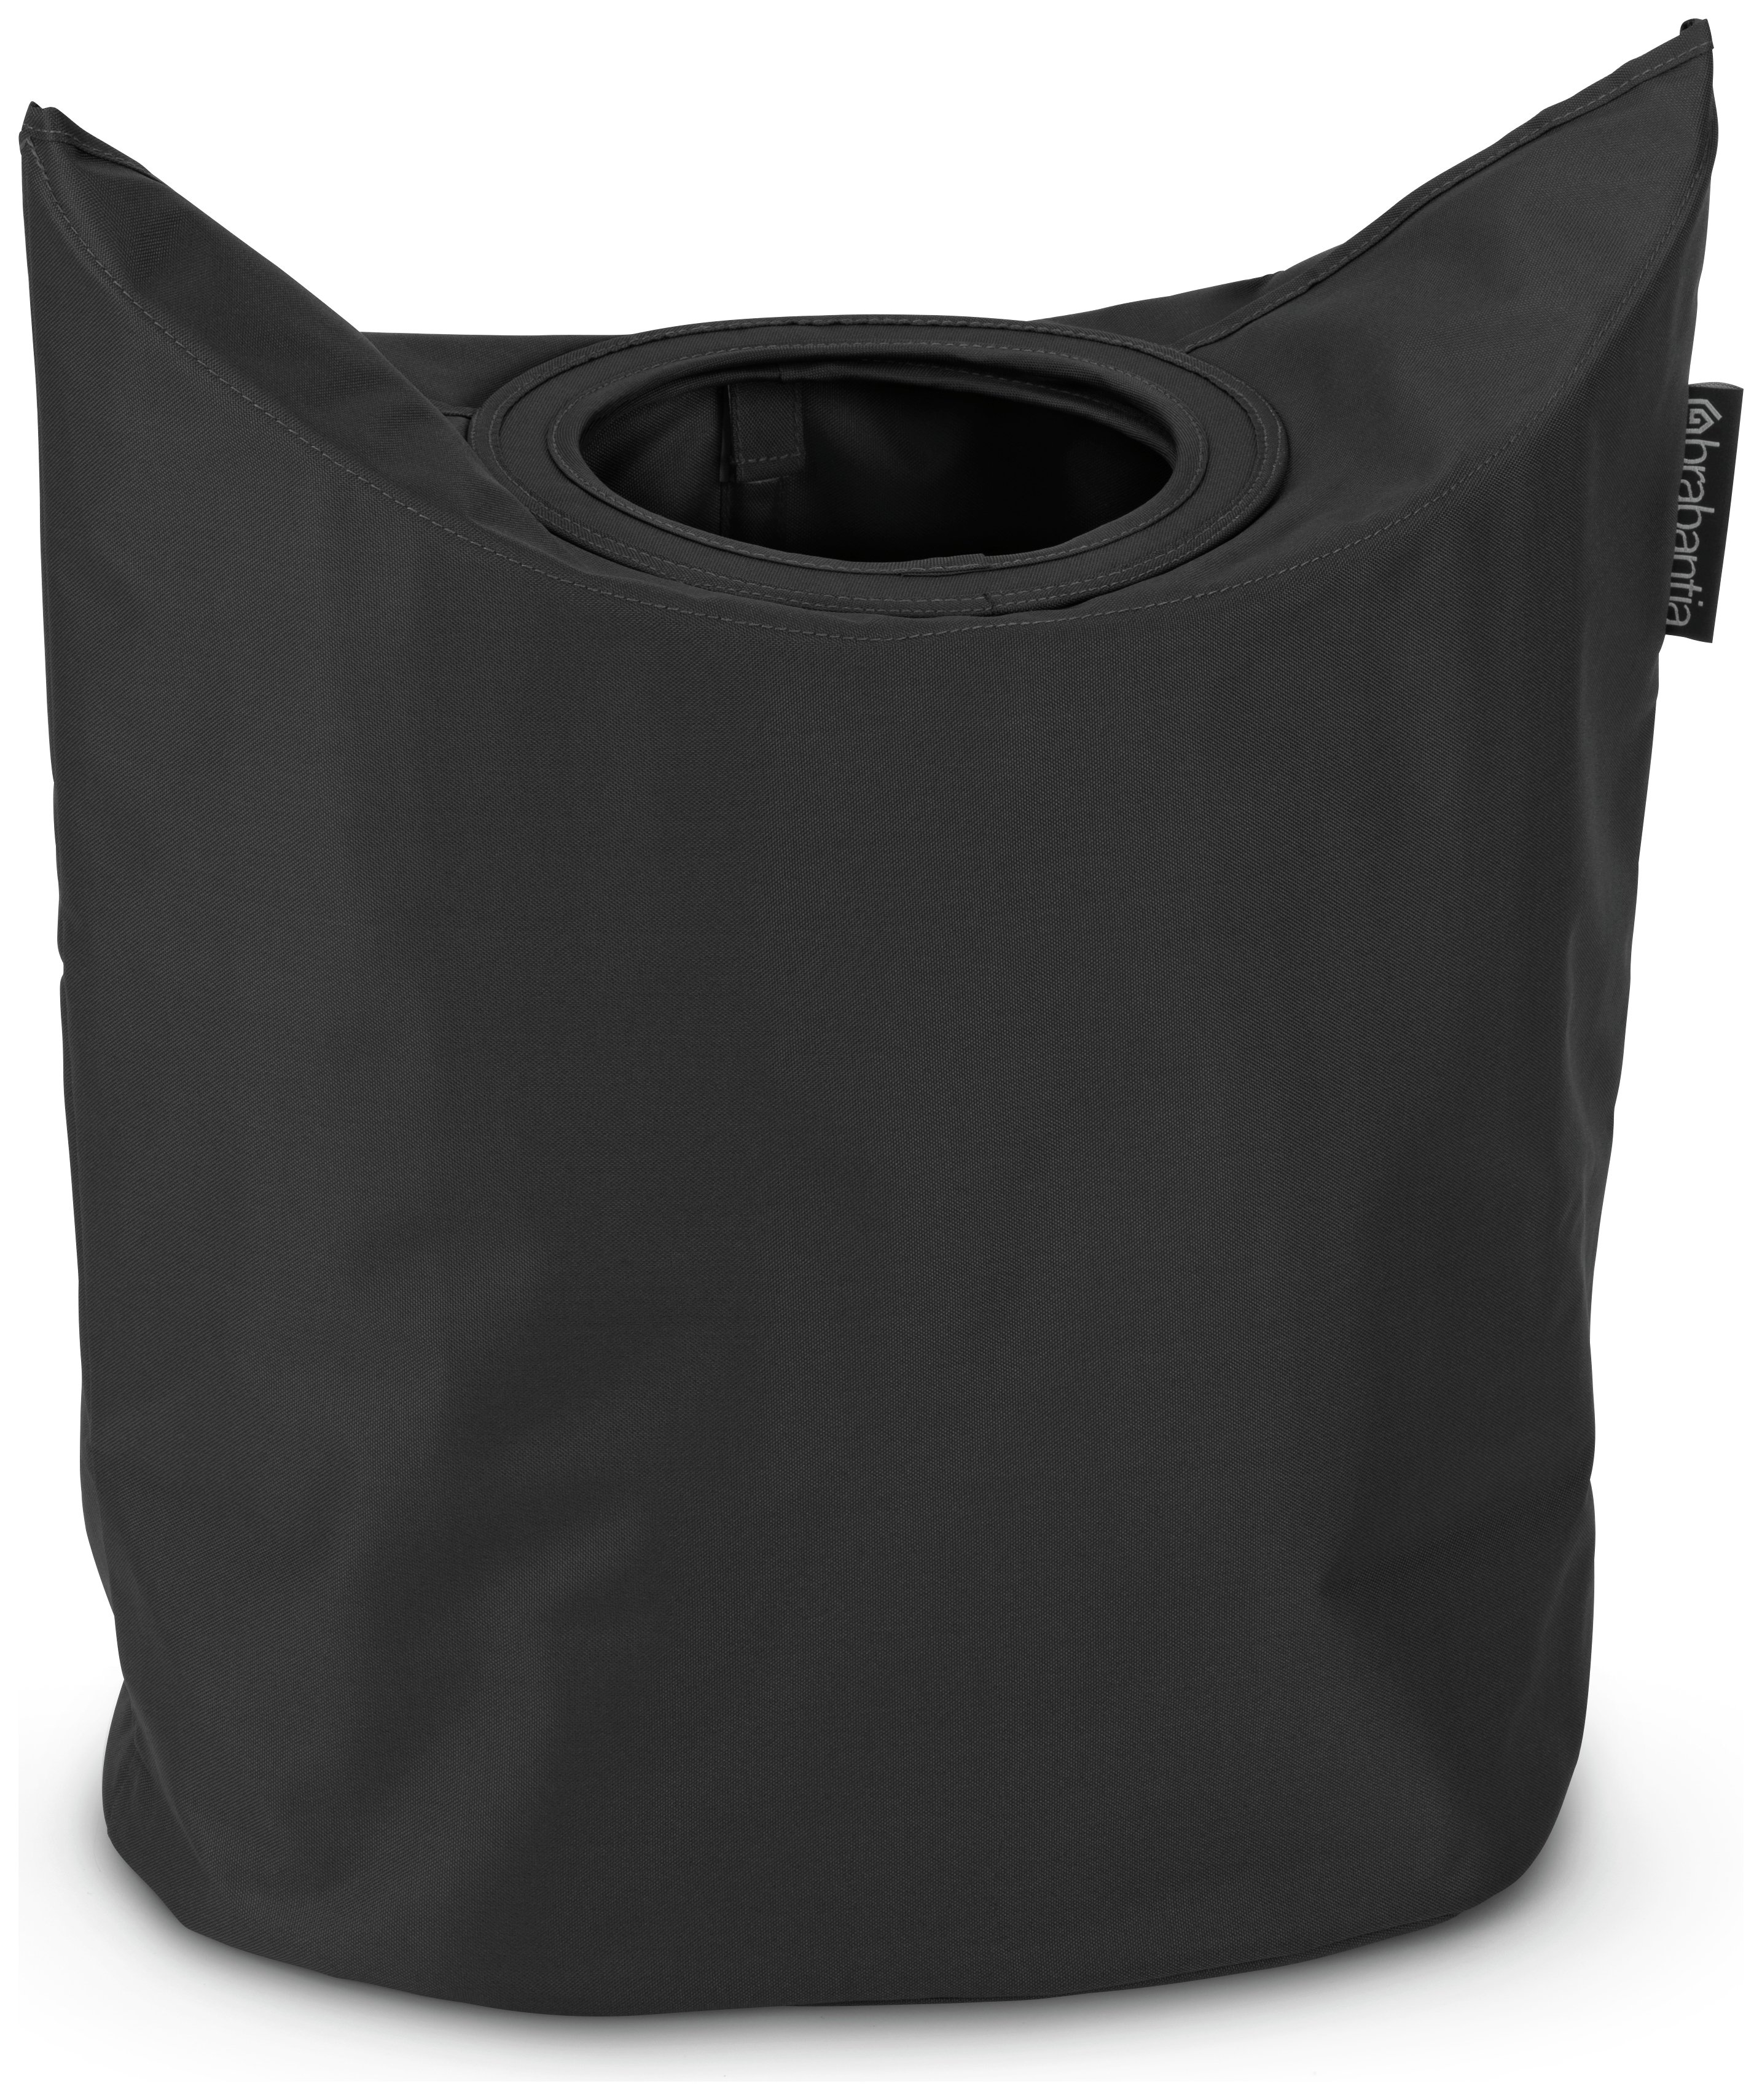 Brabantia Oval 50 Litre Laundry Bag - Black